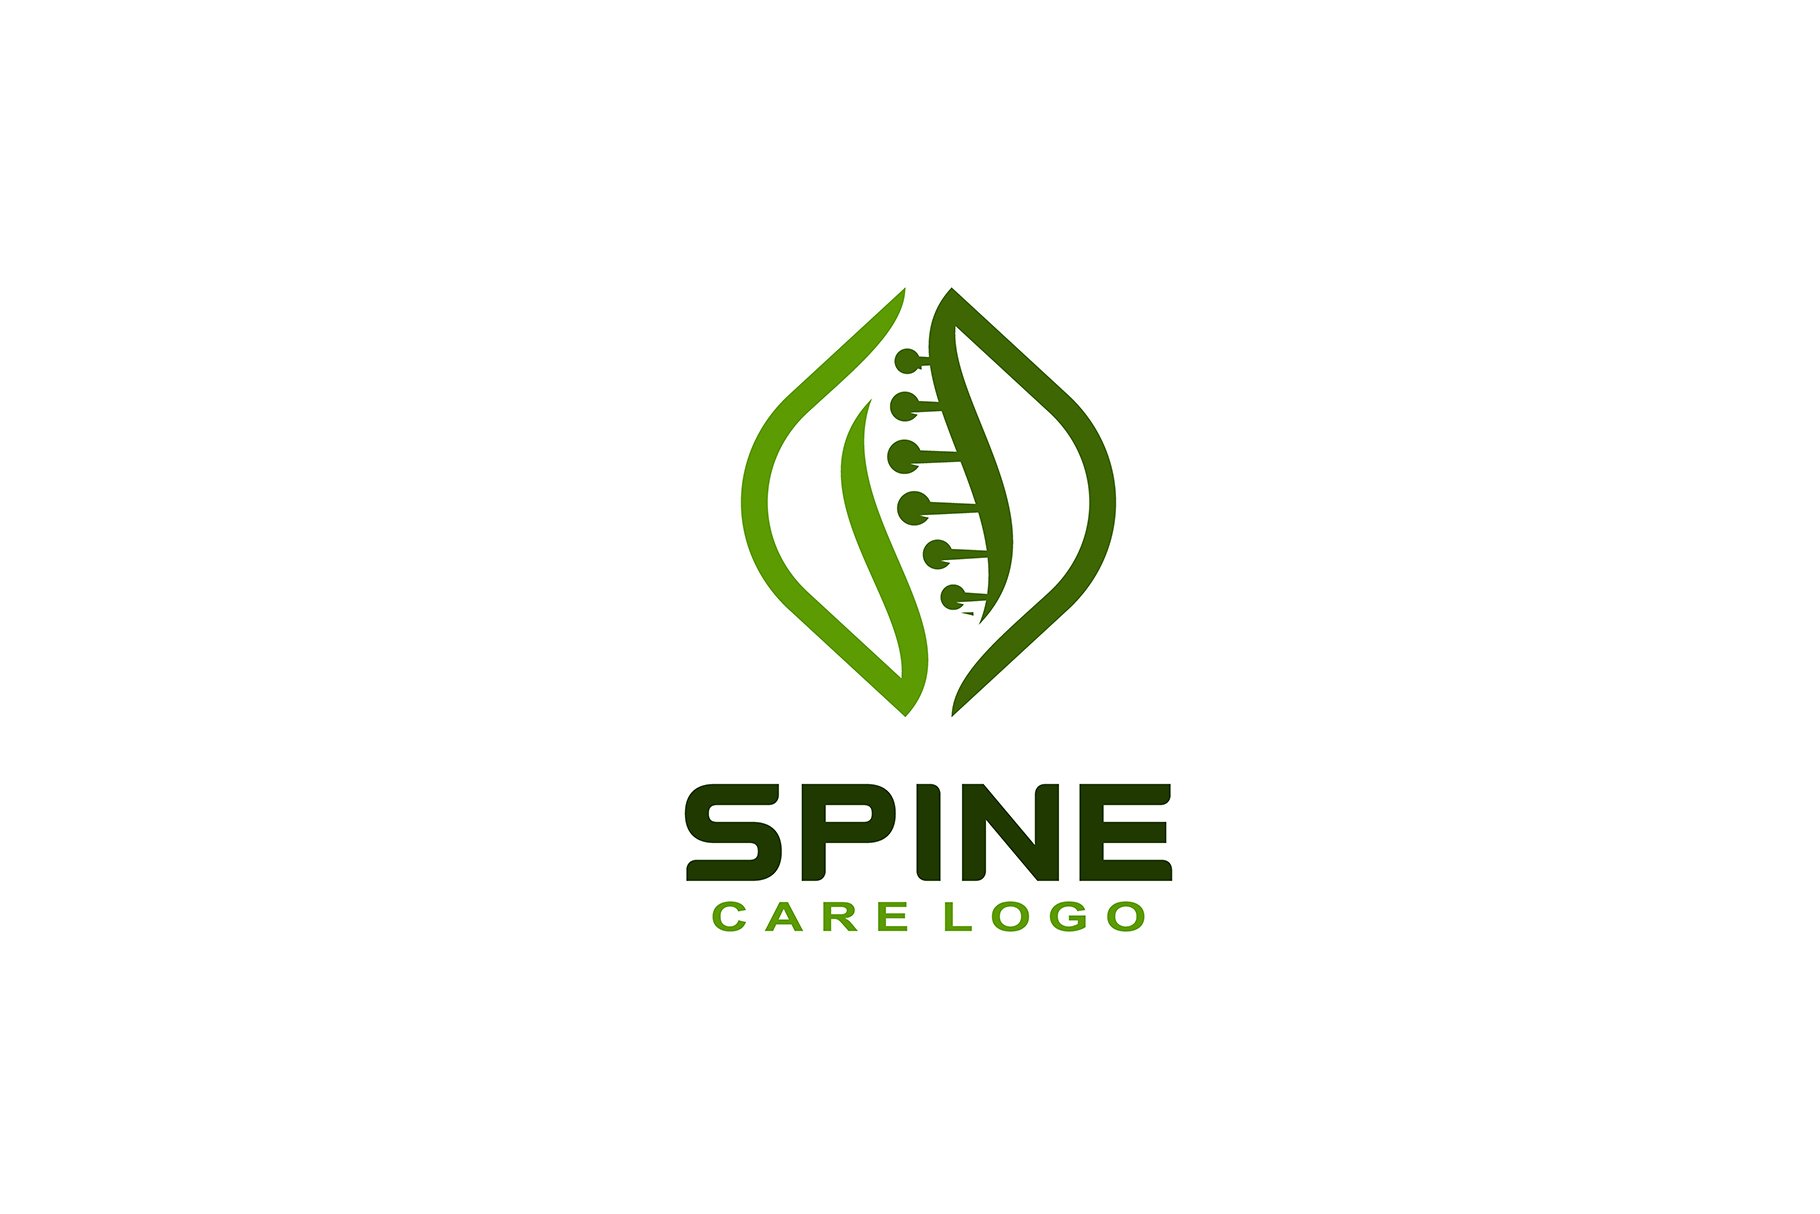 Spine logo design template cover image.